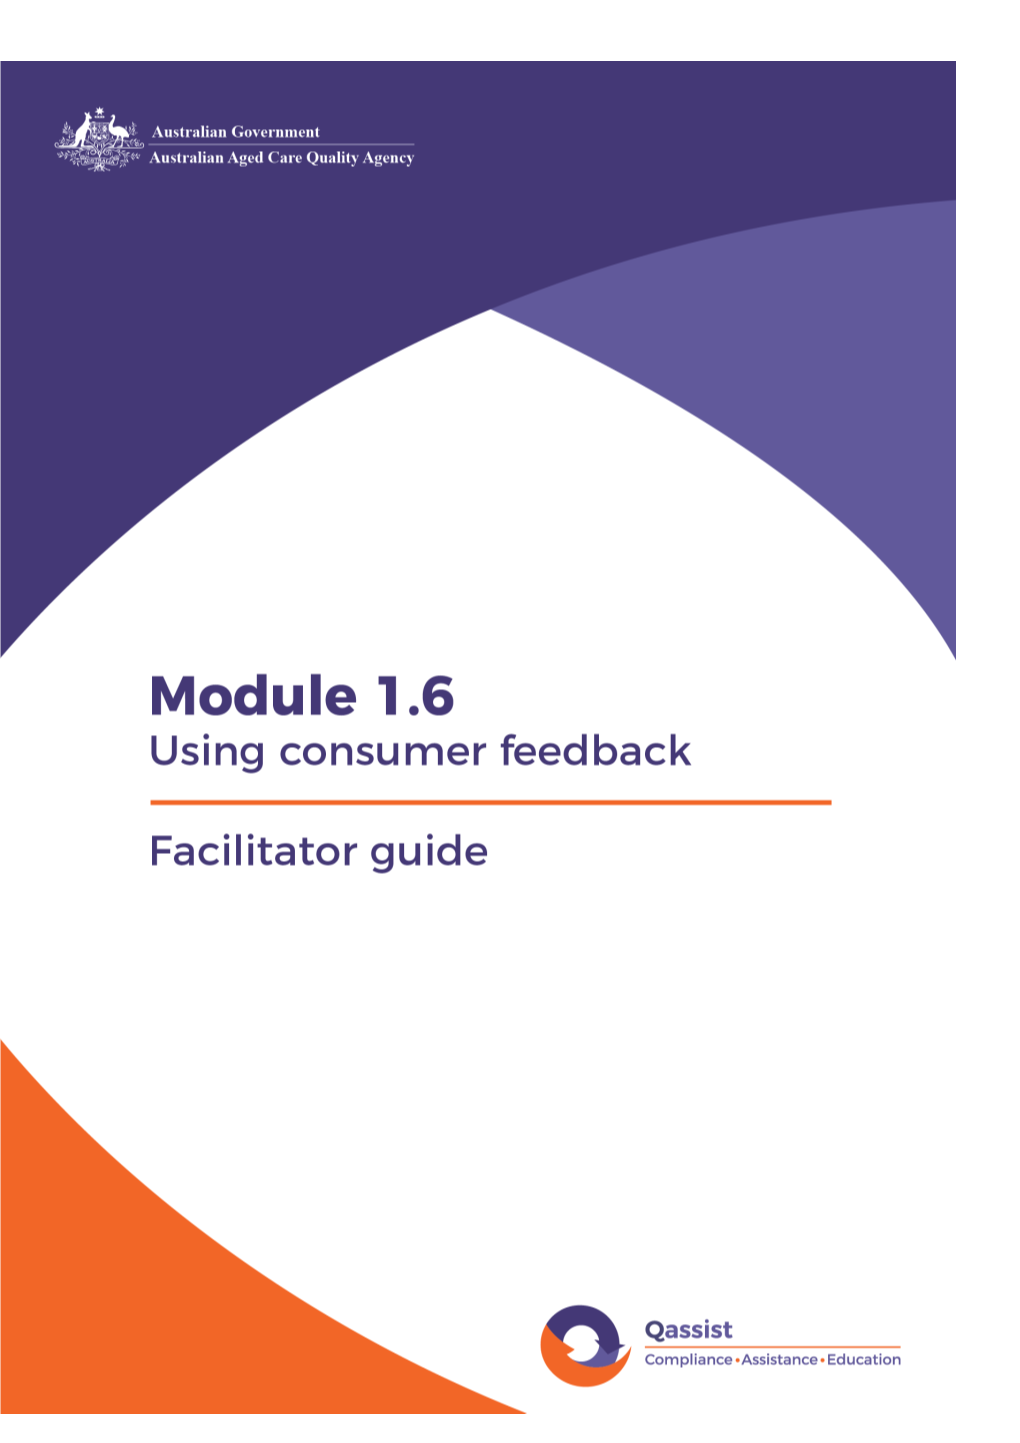 Module 1.6 Using Consumer Feedback - Facilitator Guide